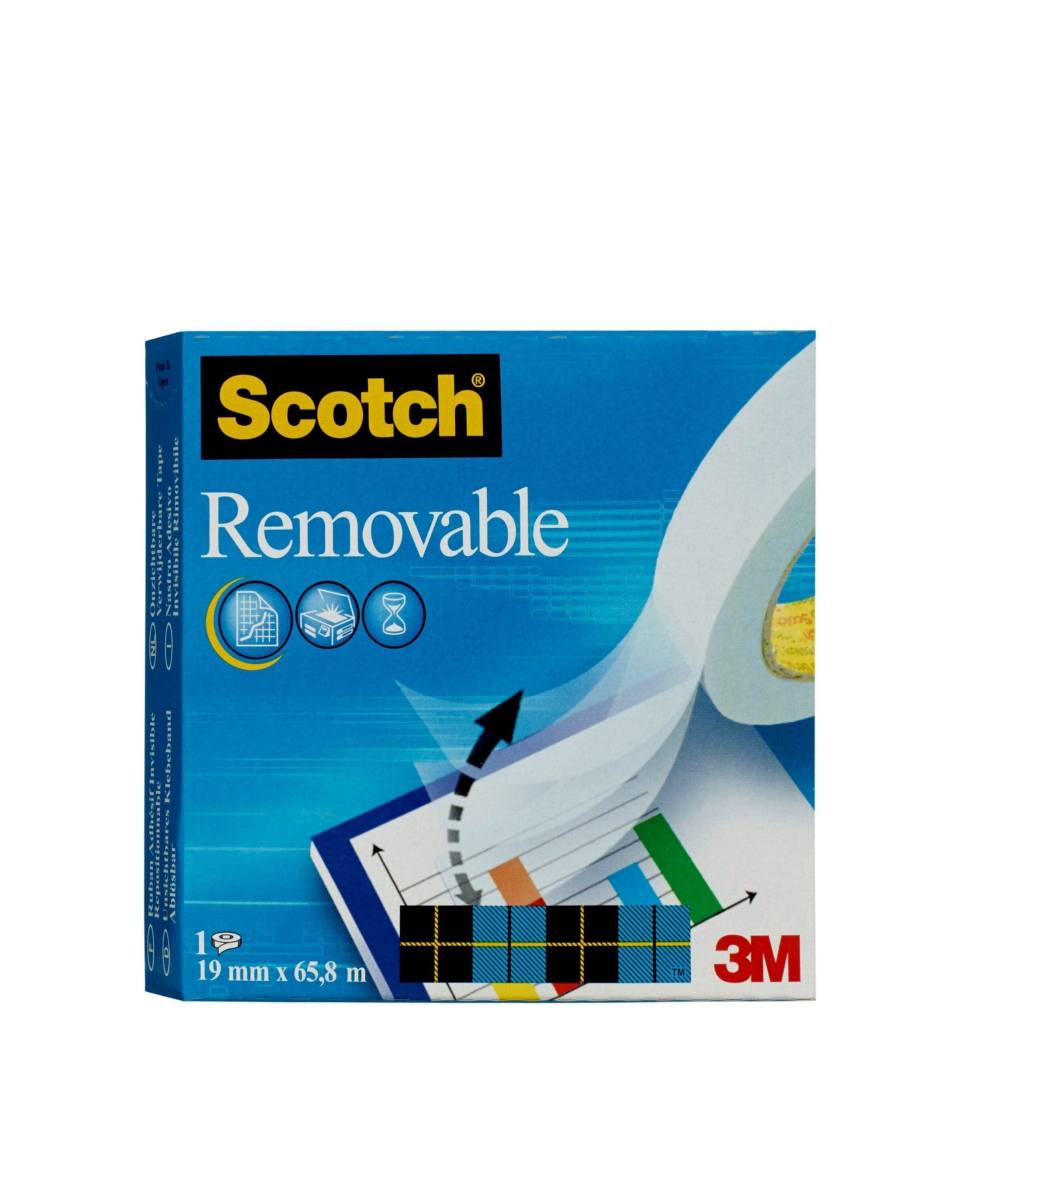 3M Scotch Removable Magic adhesive tape 1 roll 19 mm x 66 m